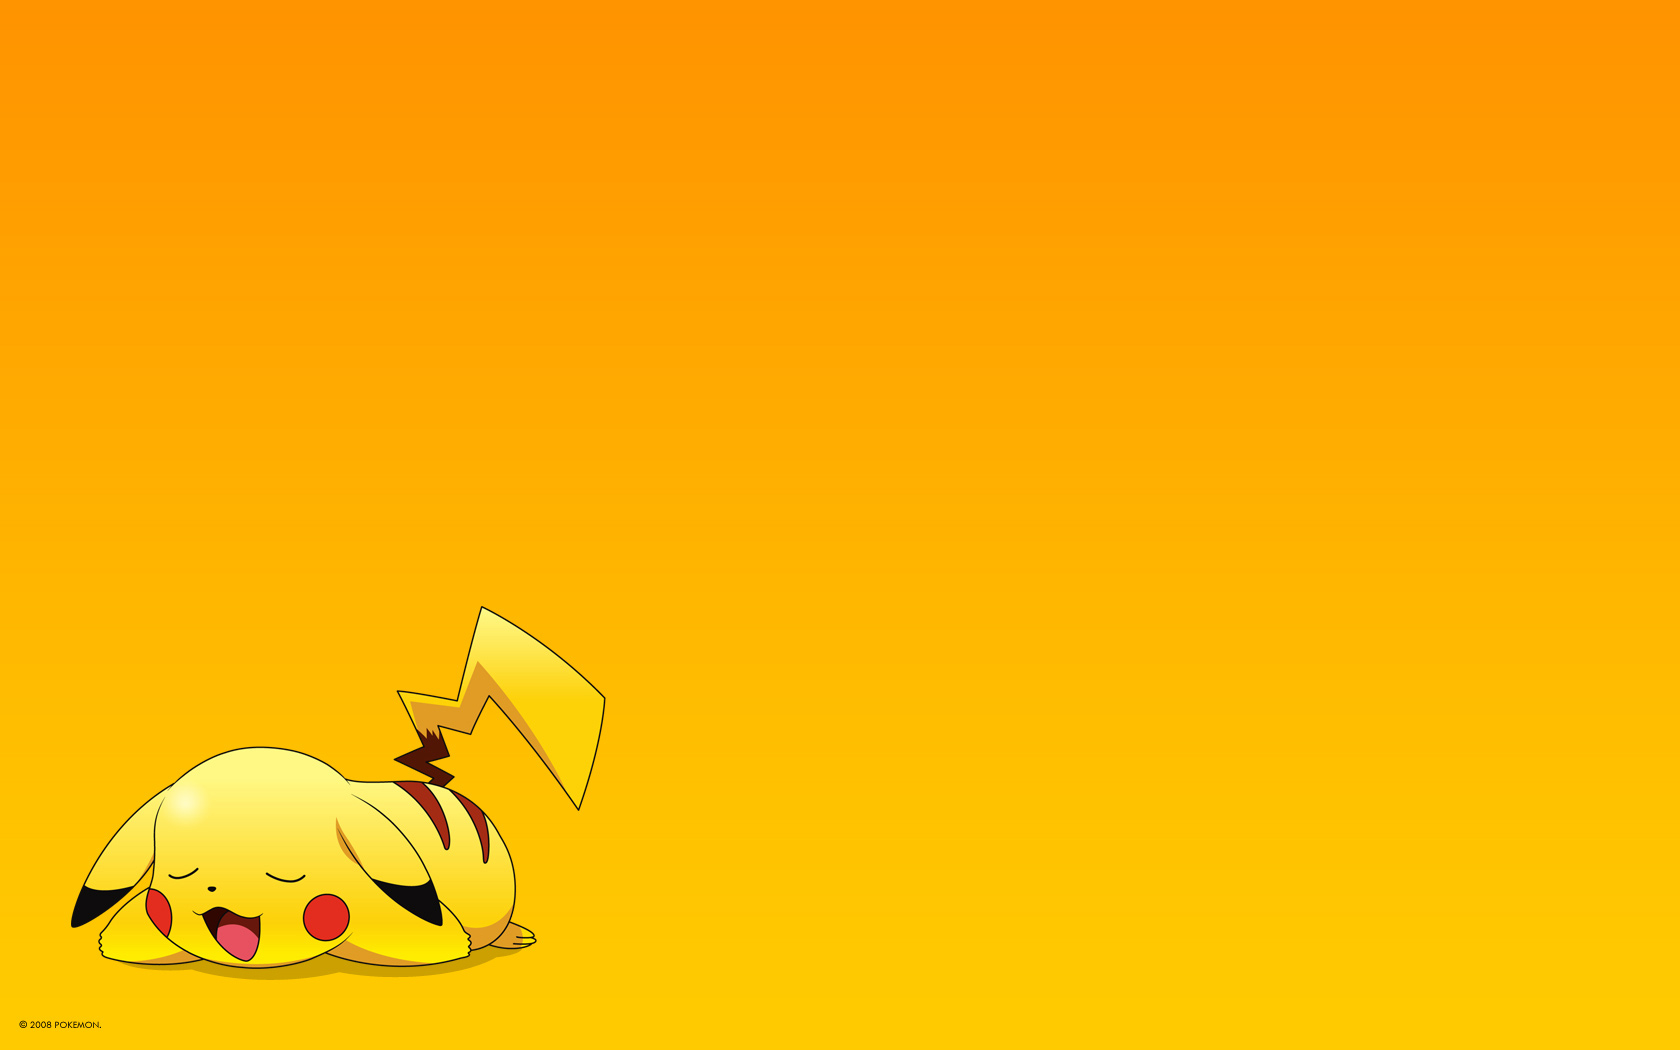 Pikachu Wallpaper - Pikachu Wallpaper (24422765) - Fanpop